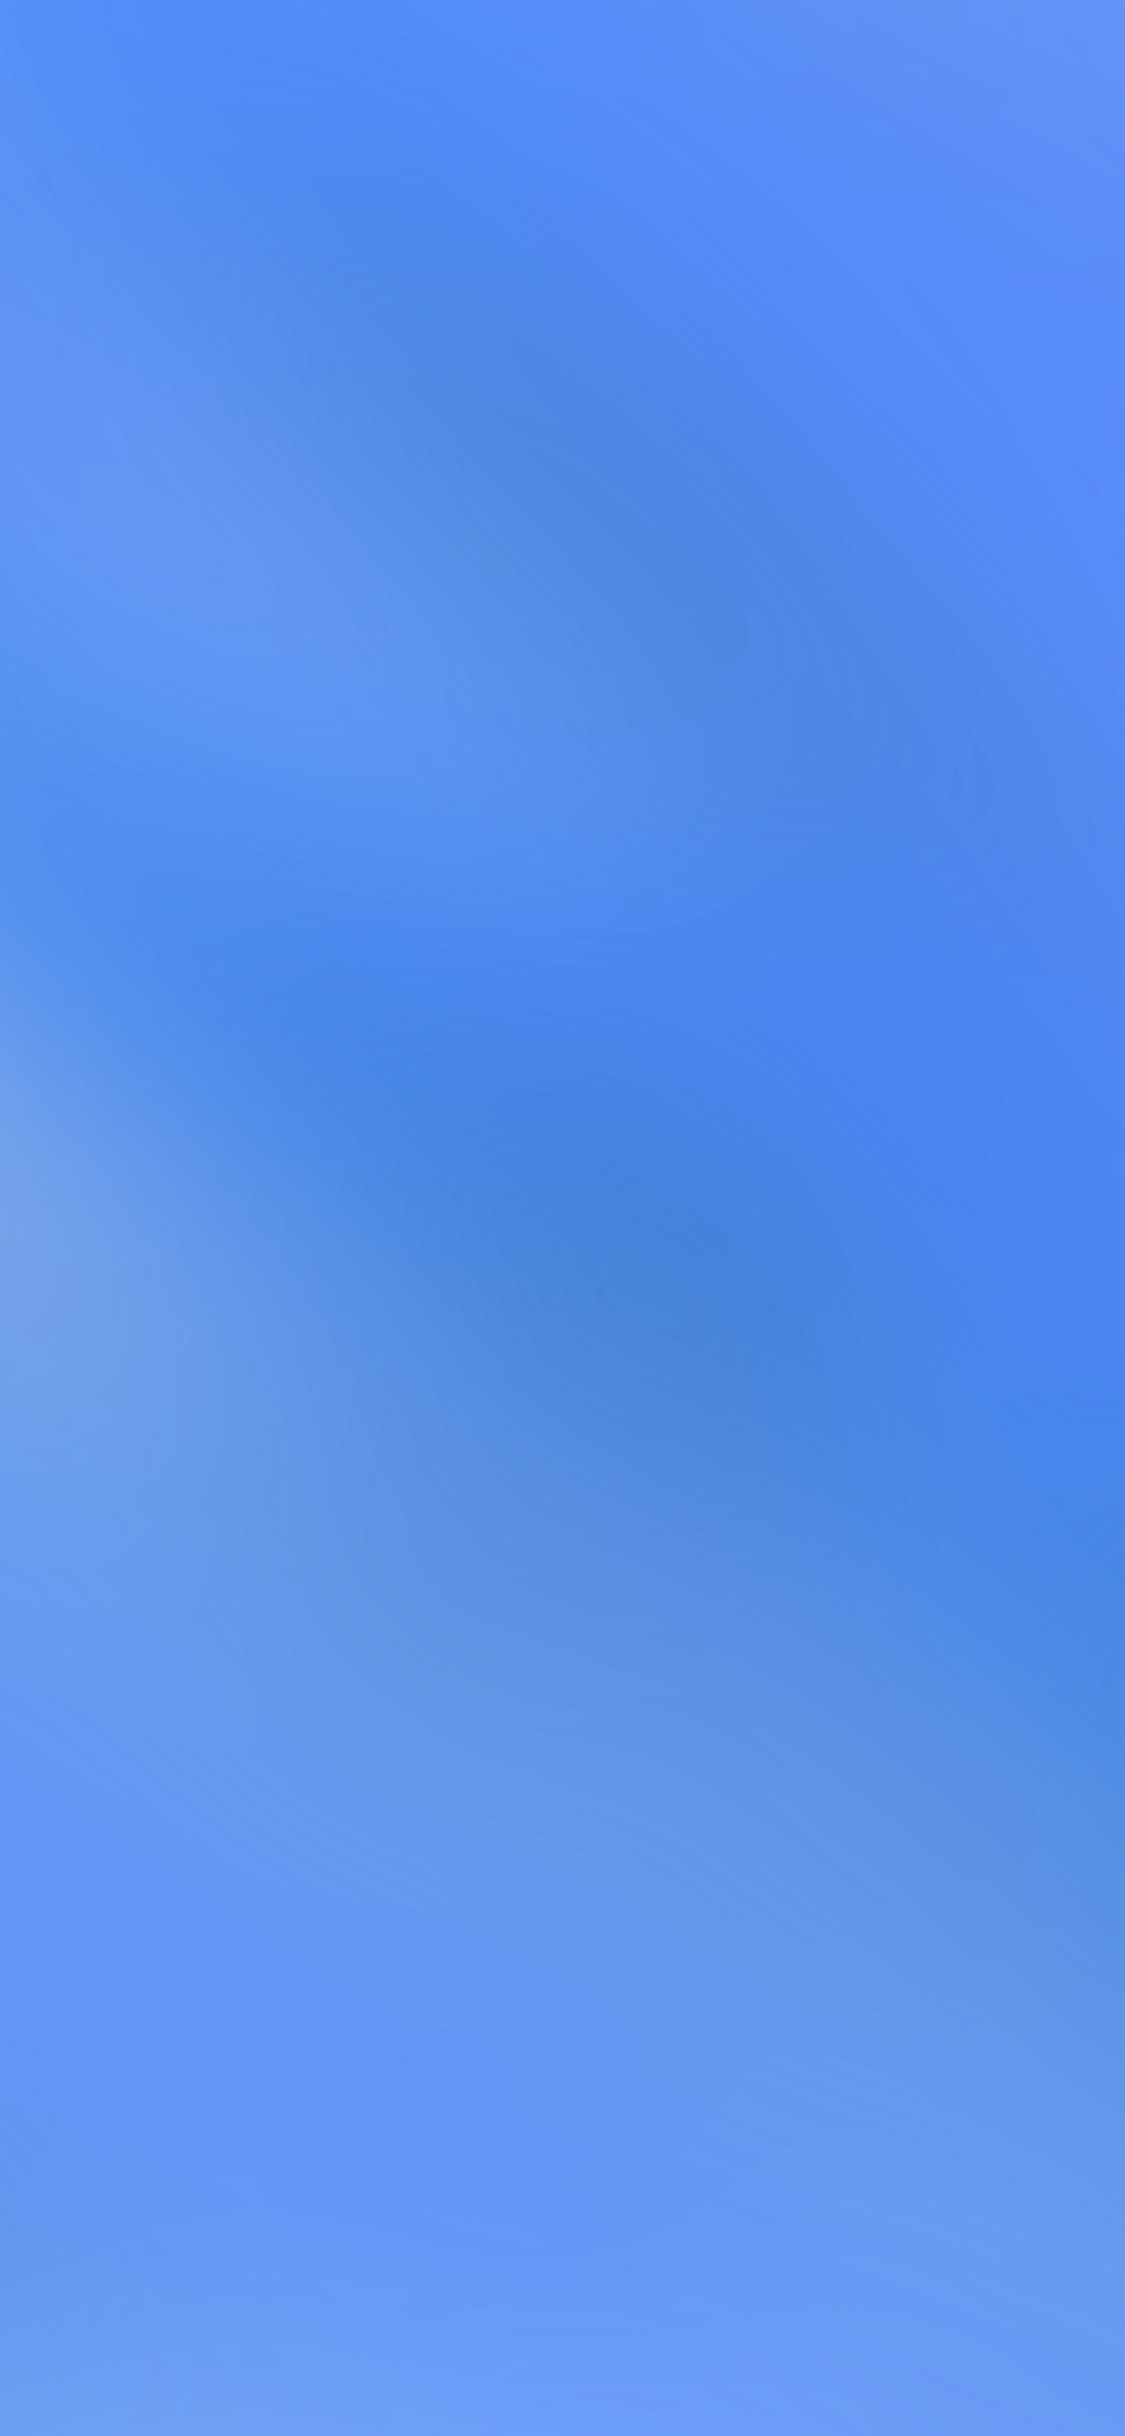 iPhoneXpapers.com | iPhone X wallpaper | sk92-blue-smoke-blur-gradation